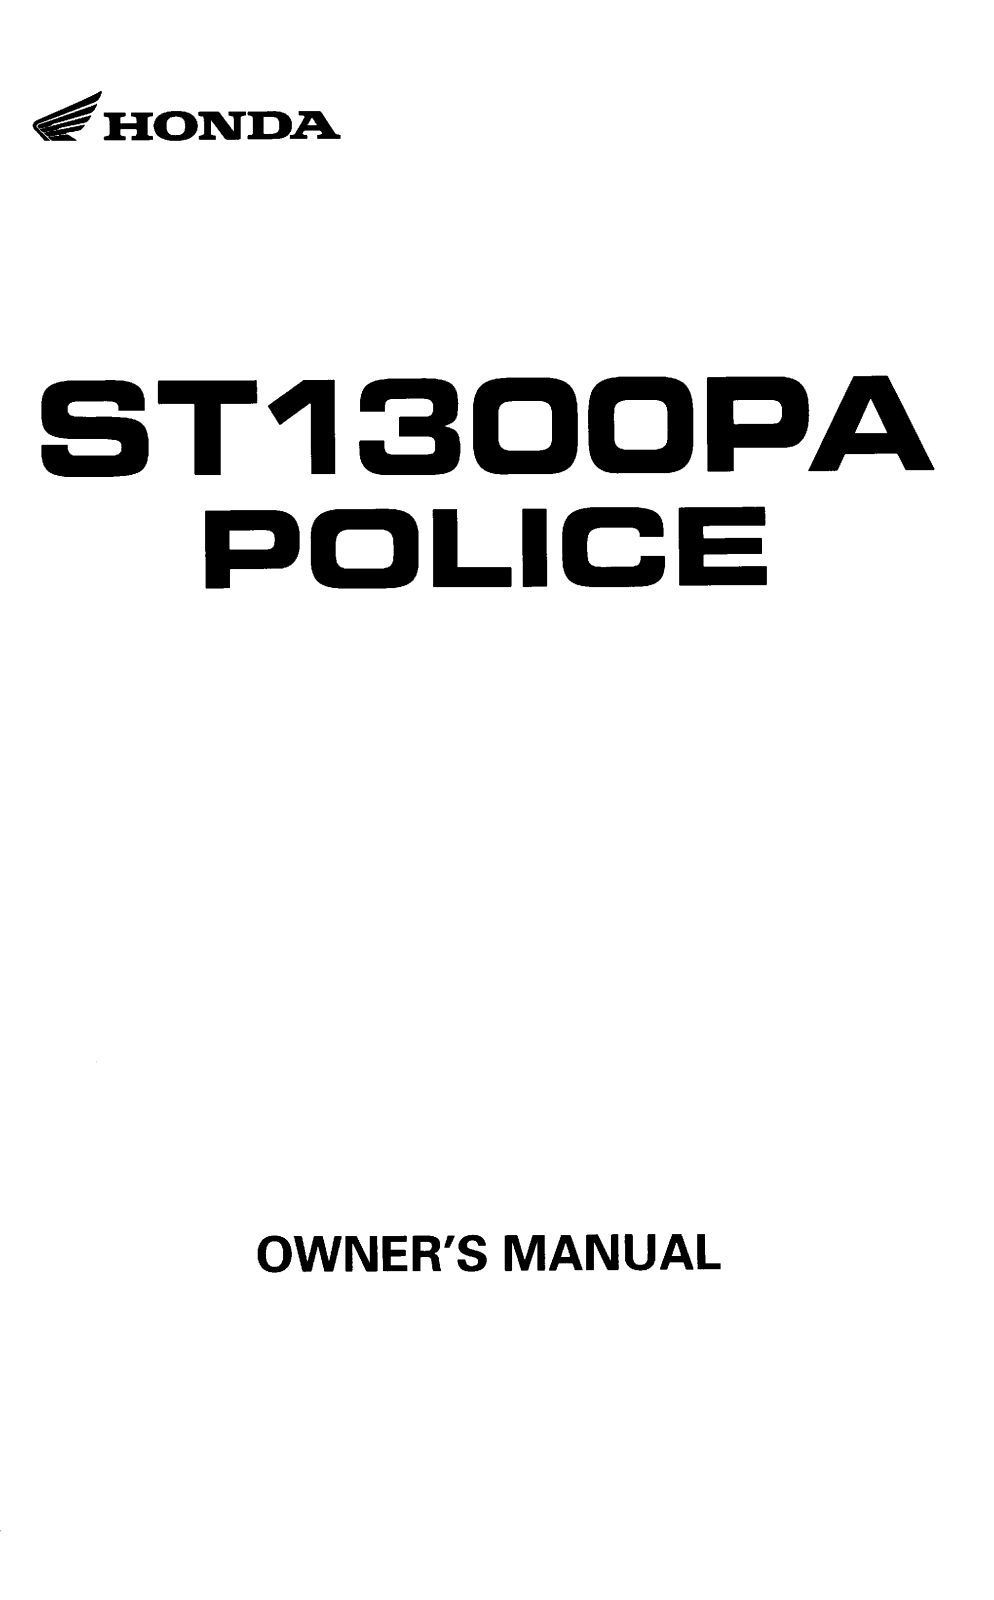 Honda ST1300PA POLICE Owner's Manual